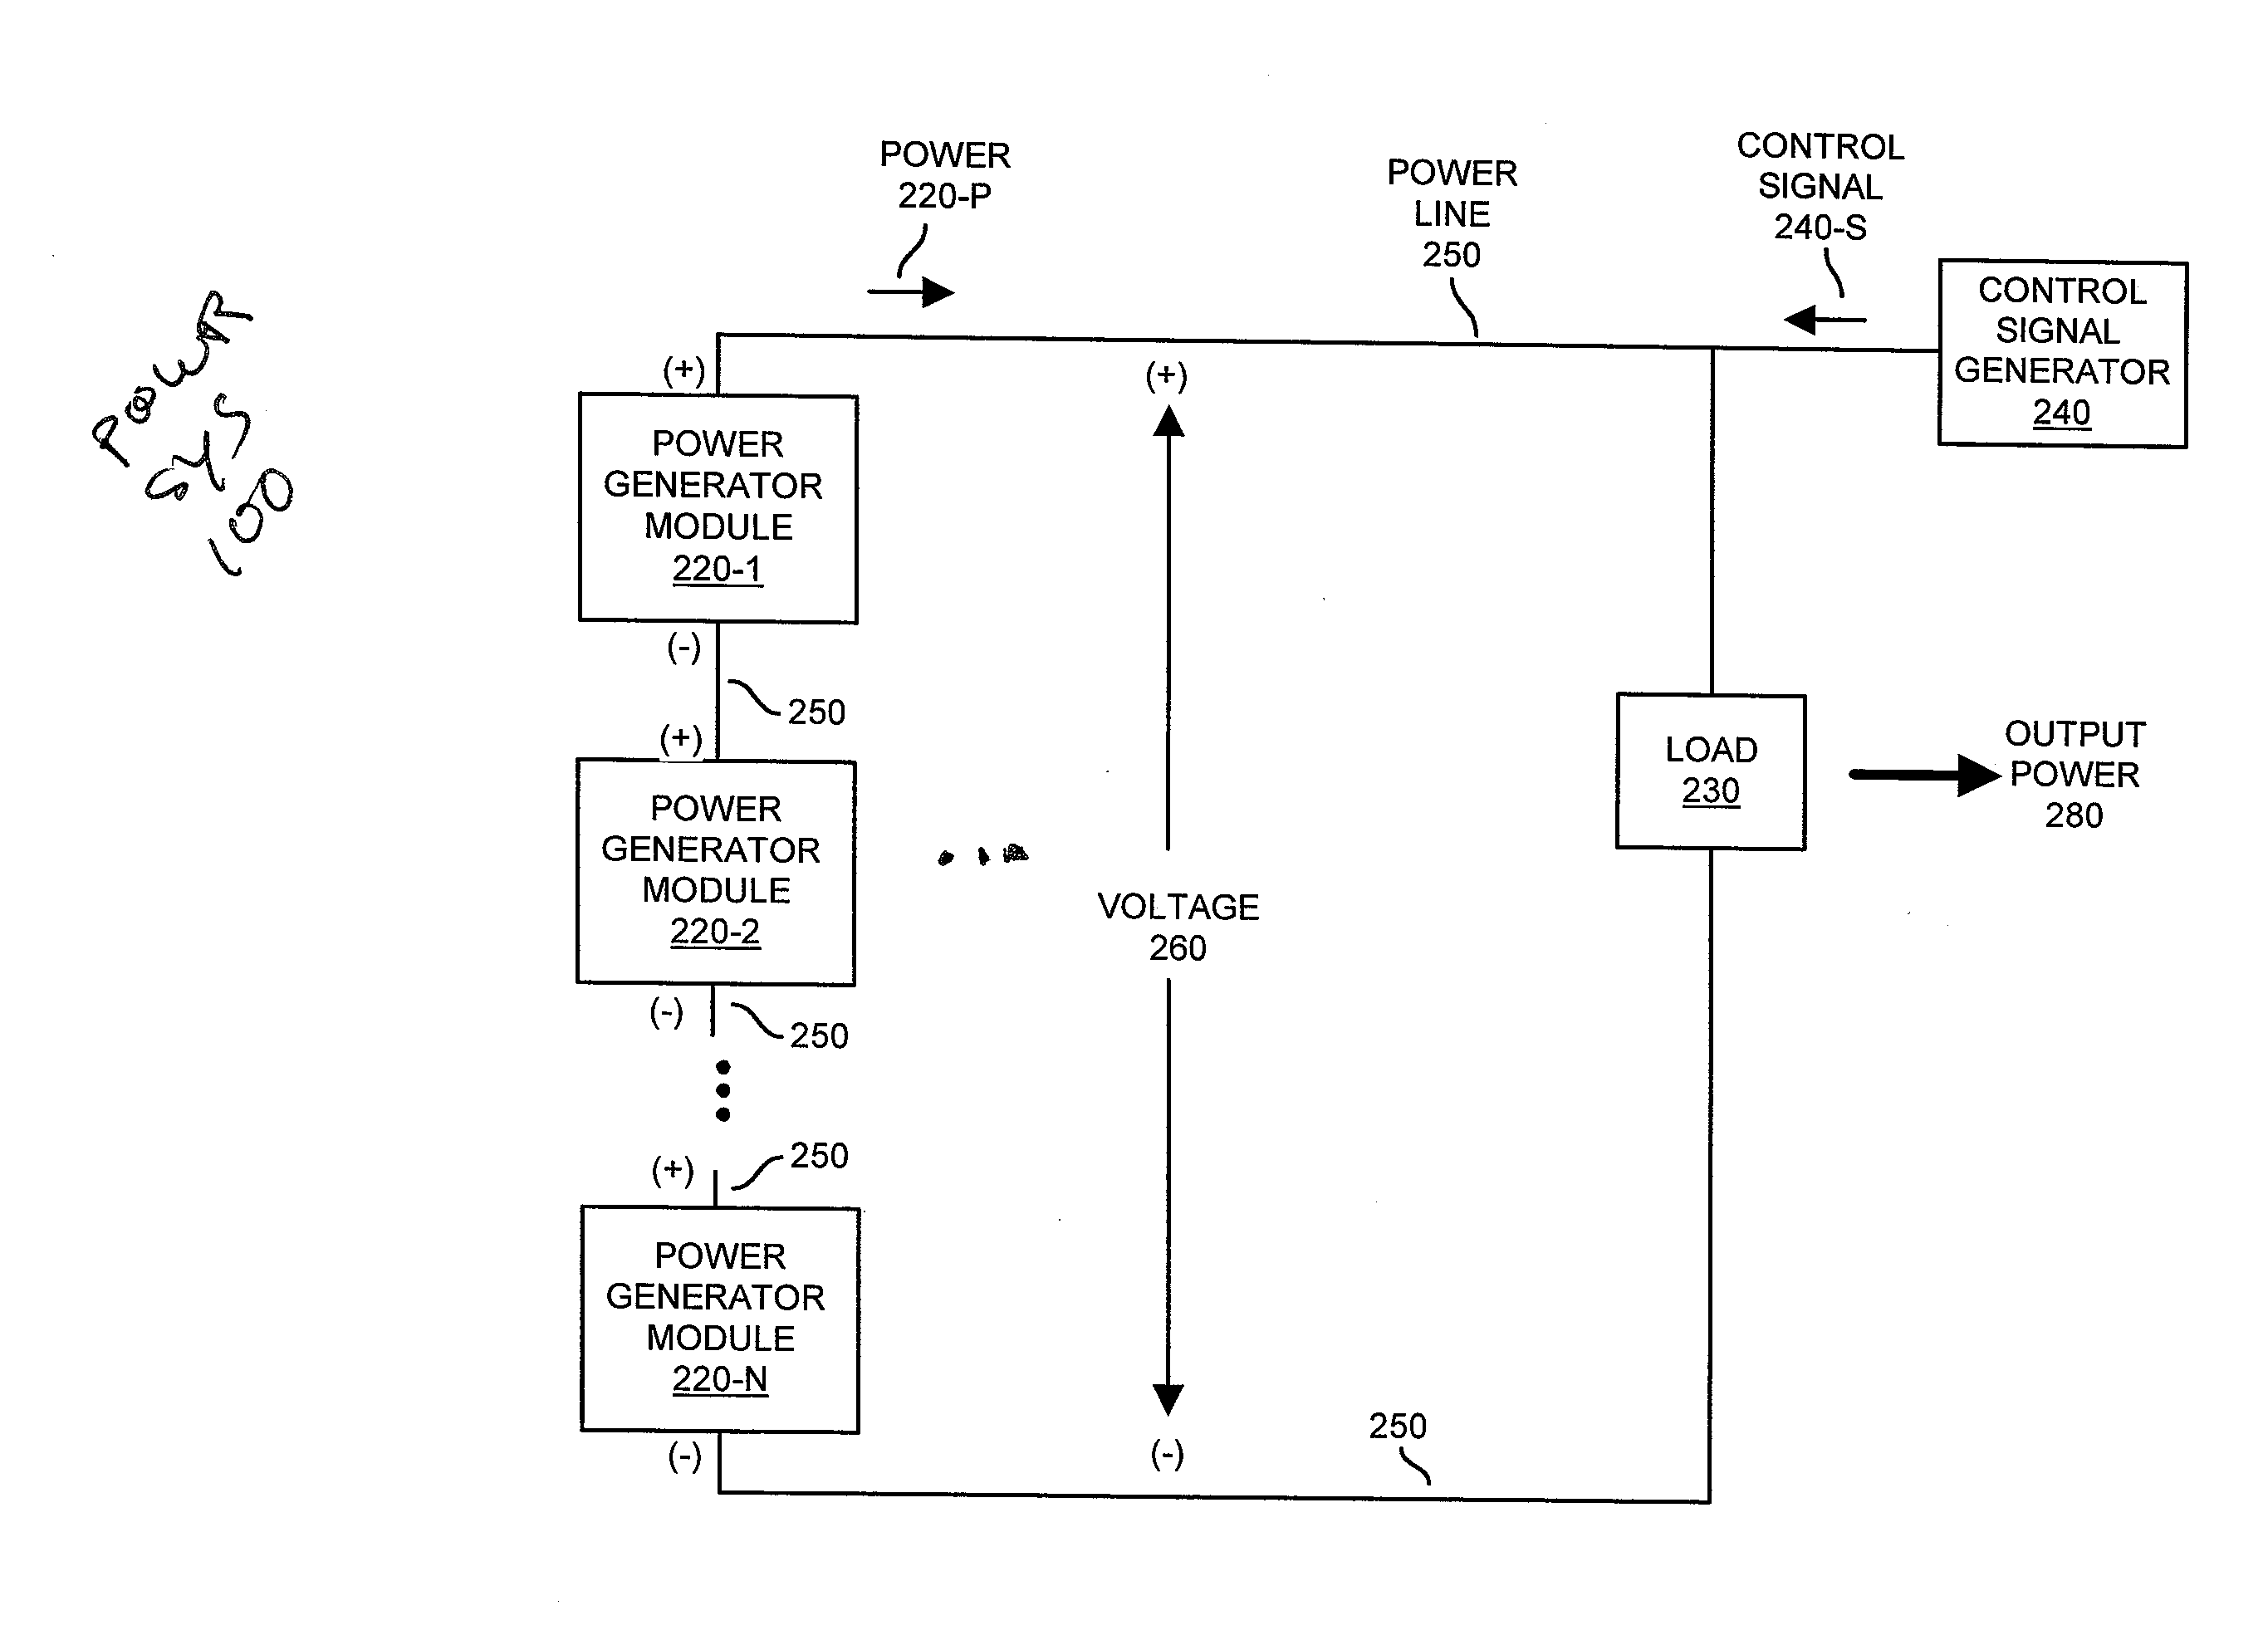 Power generator module connectivity control